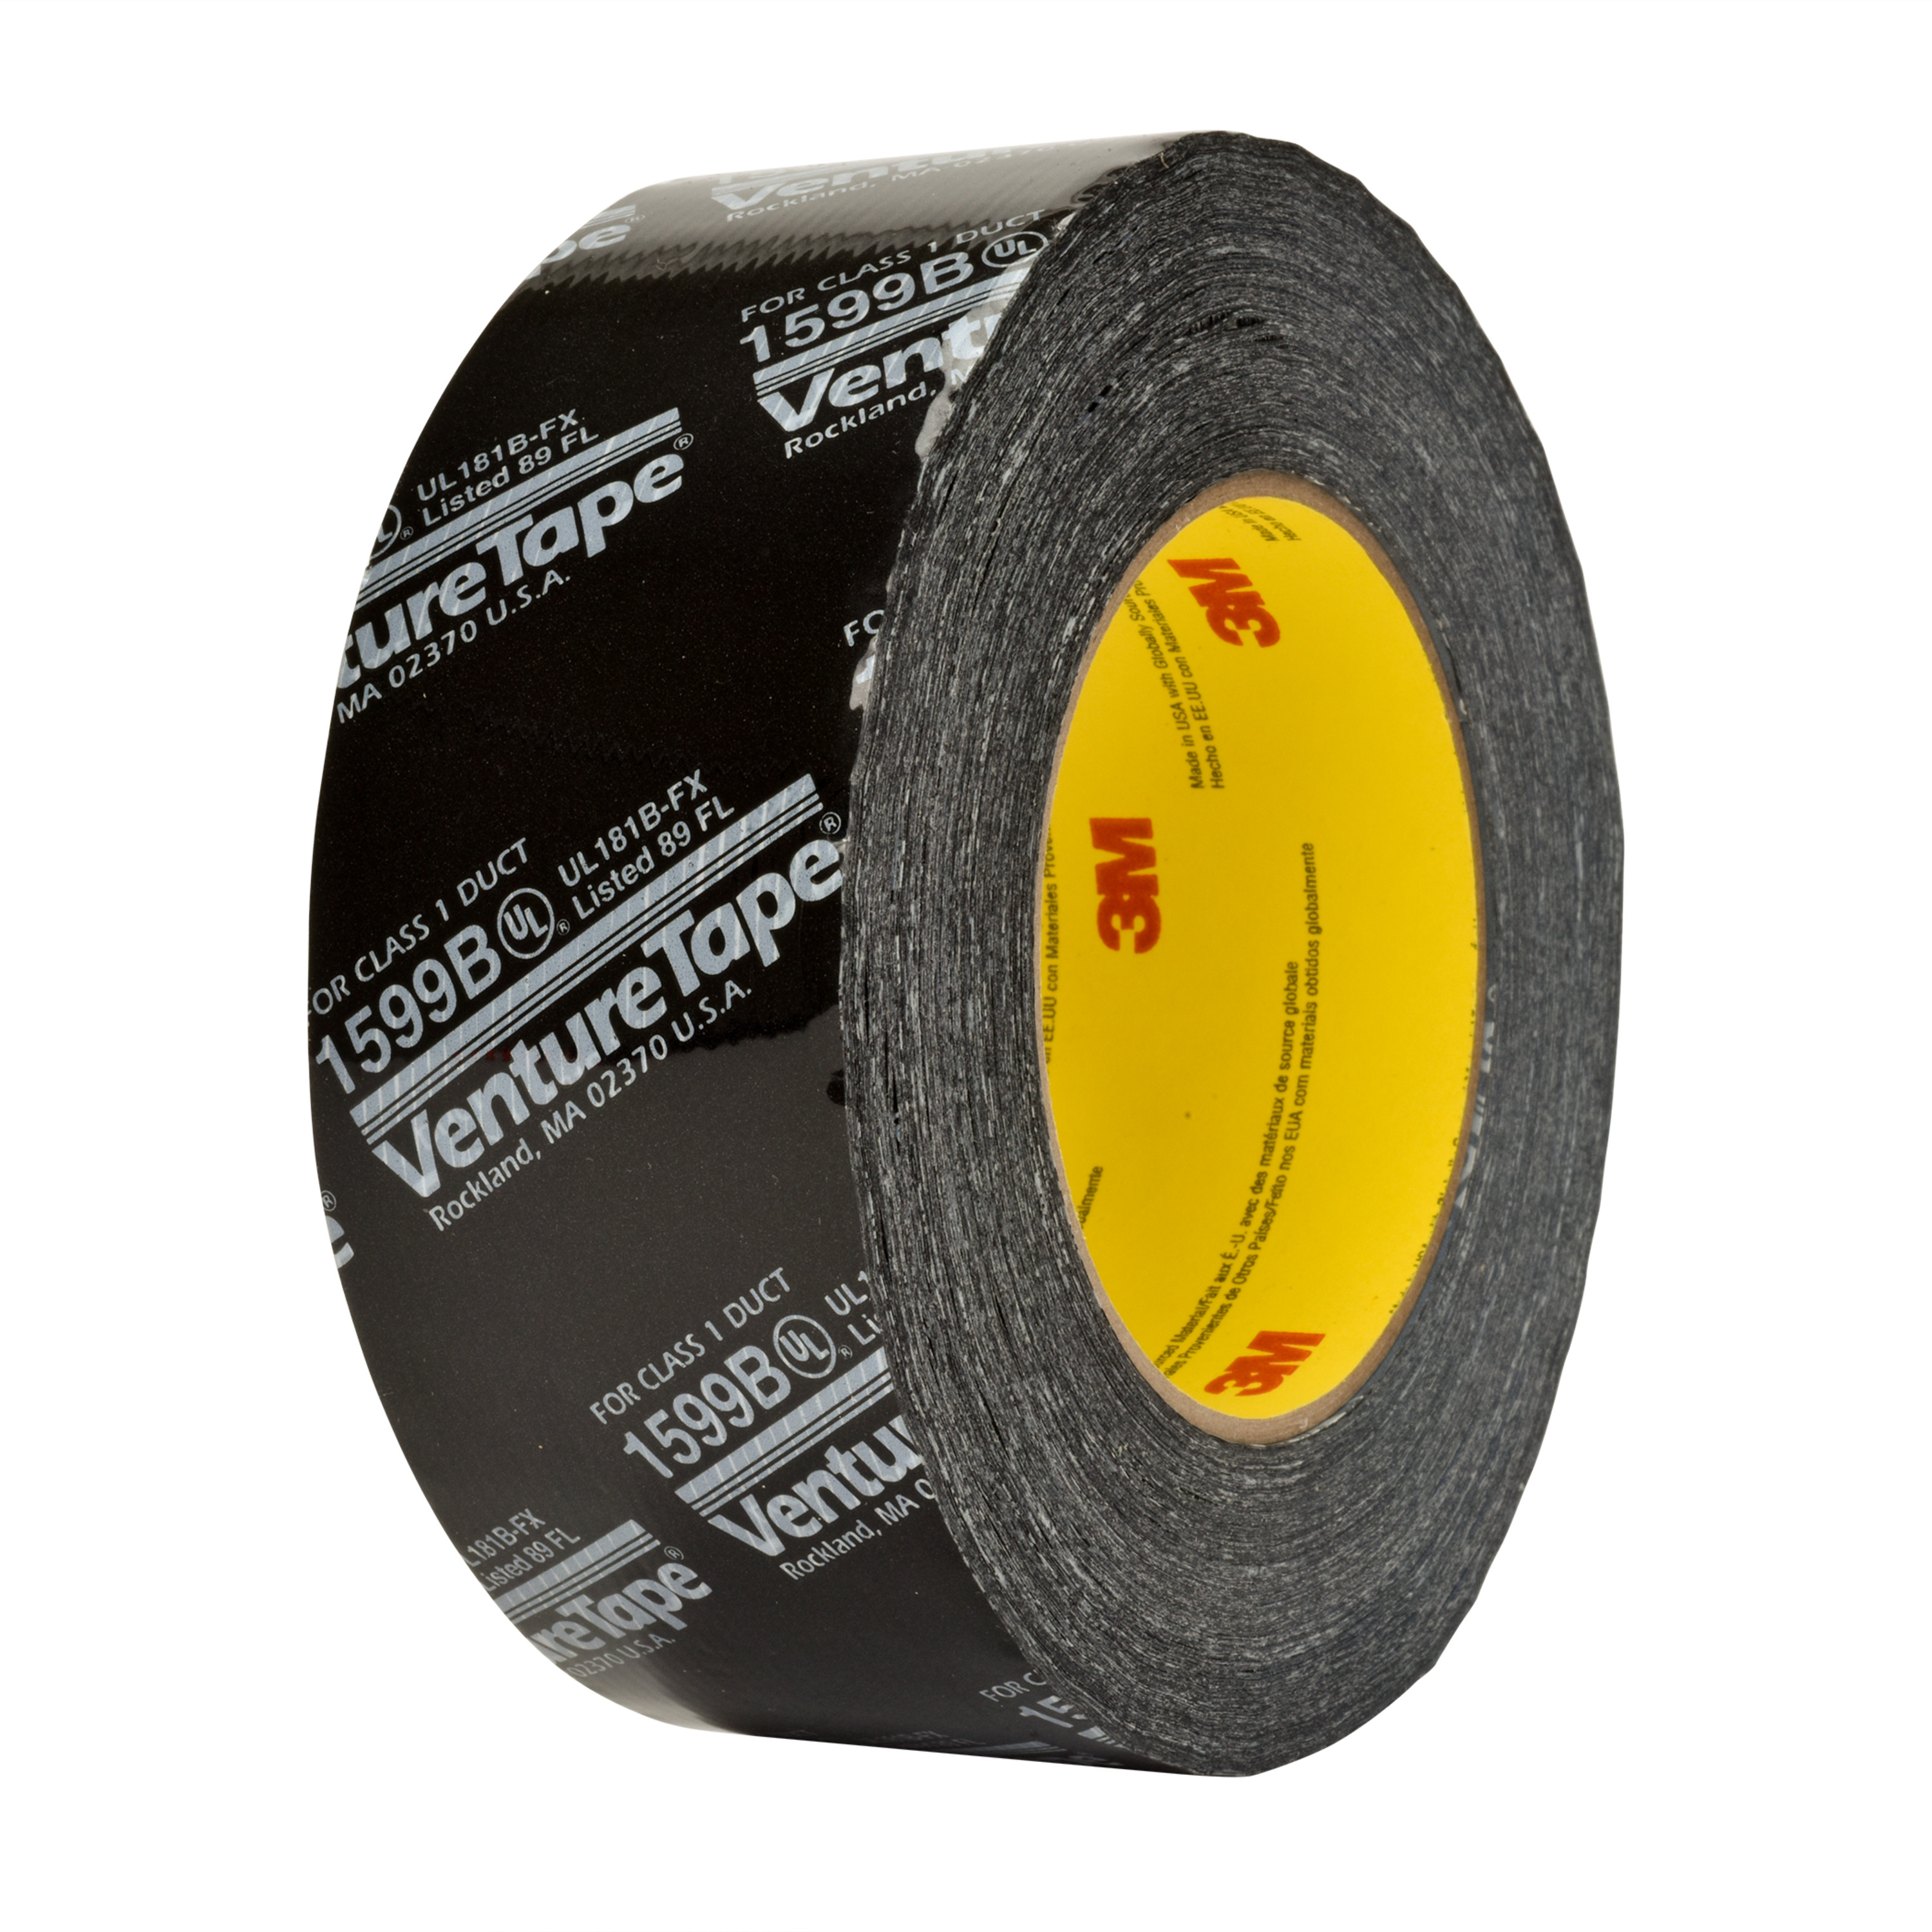 3M™ Venture Tape™ UL181B-FX Polypropylene Duct Tape 1599B, Black, 72 mm
x 109.7 m, 3 mil, 16 rolls per case